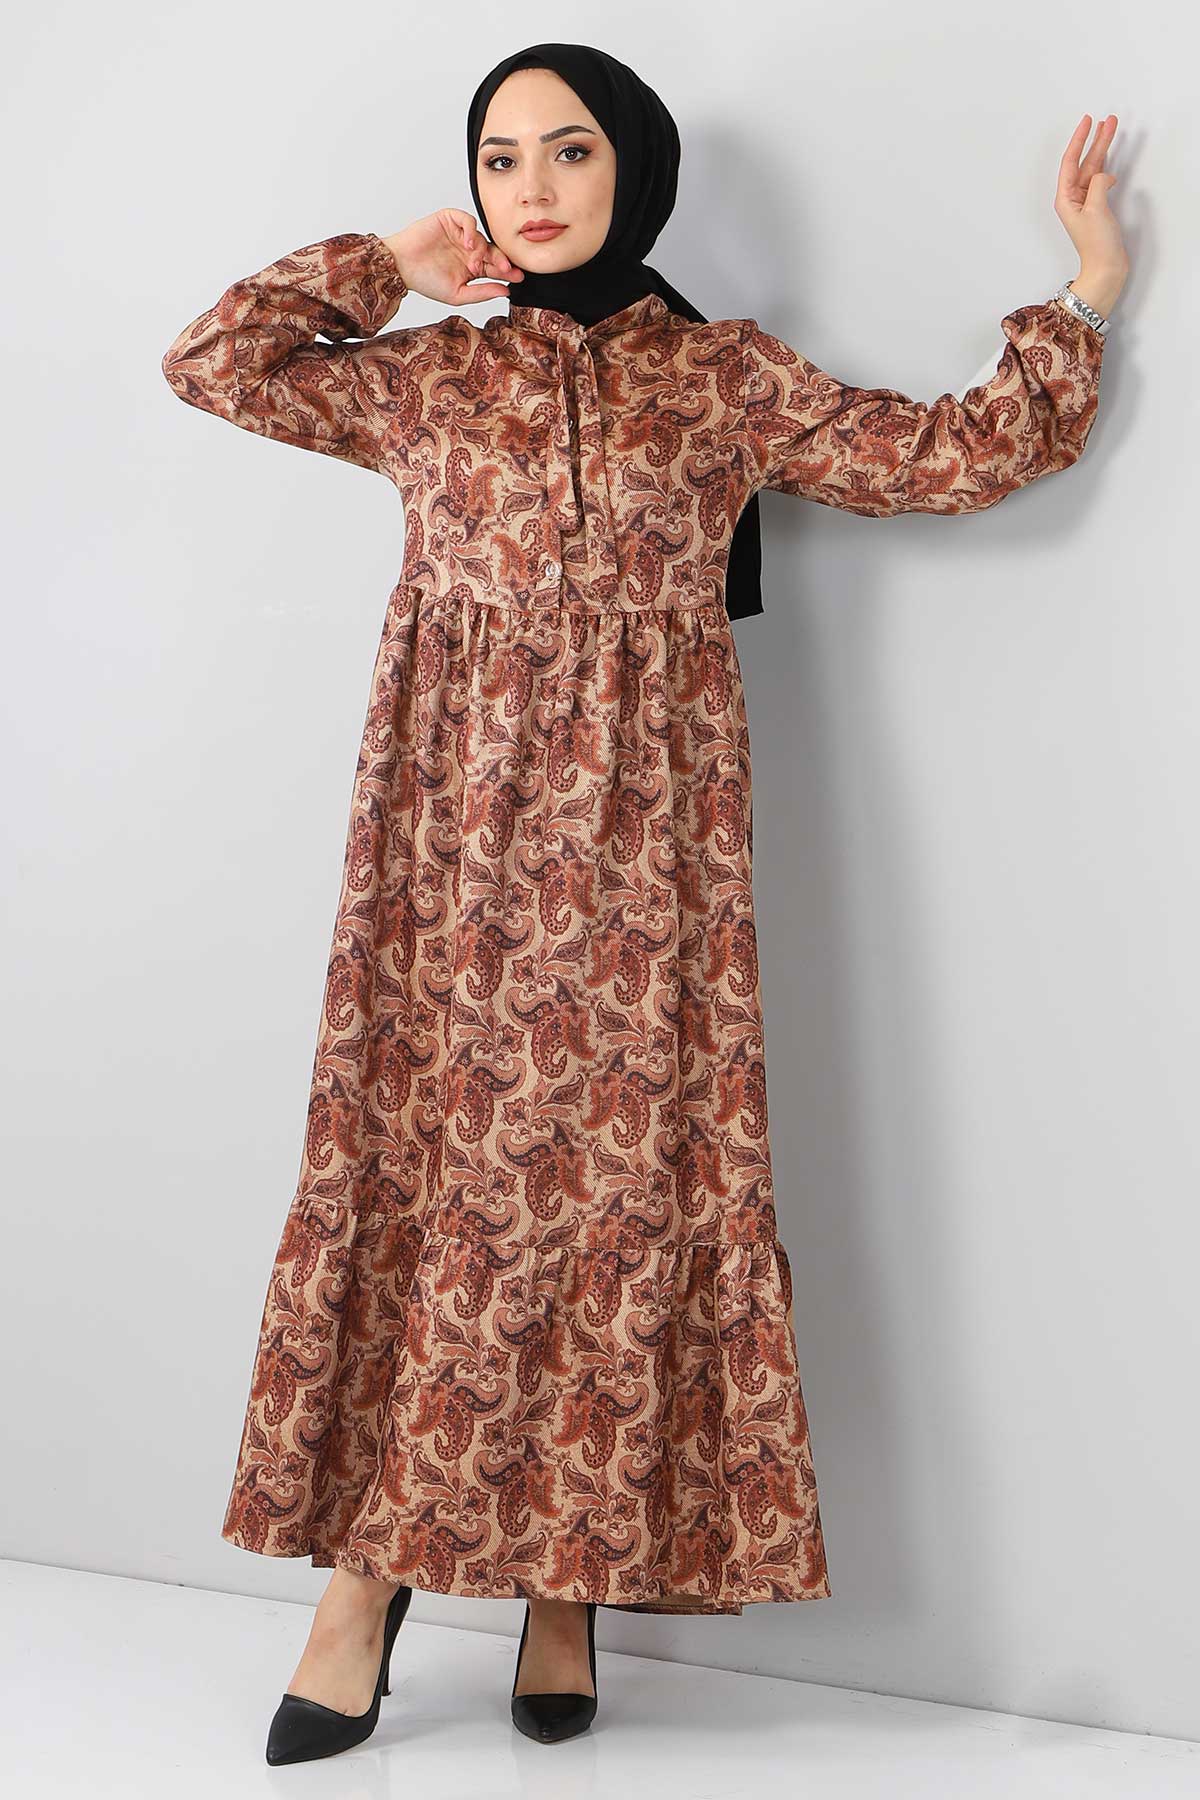 Tesettür Dünyası - Shawl Patterned Dress TSD4418 Mink